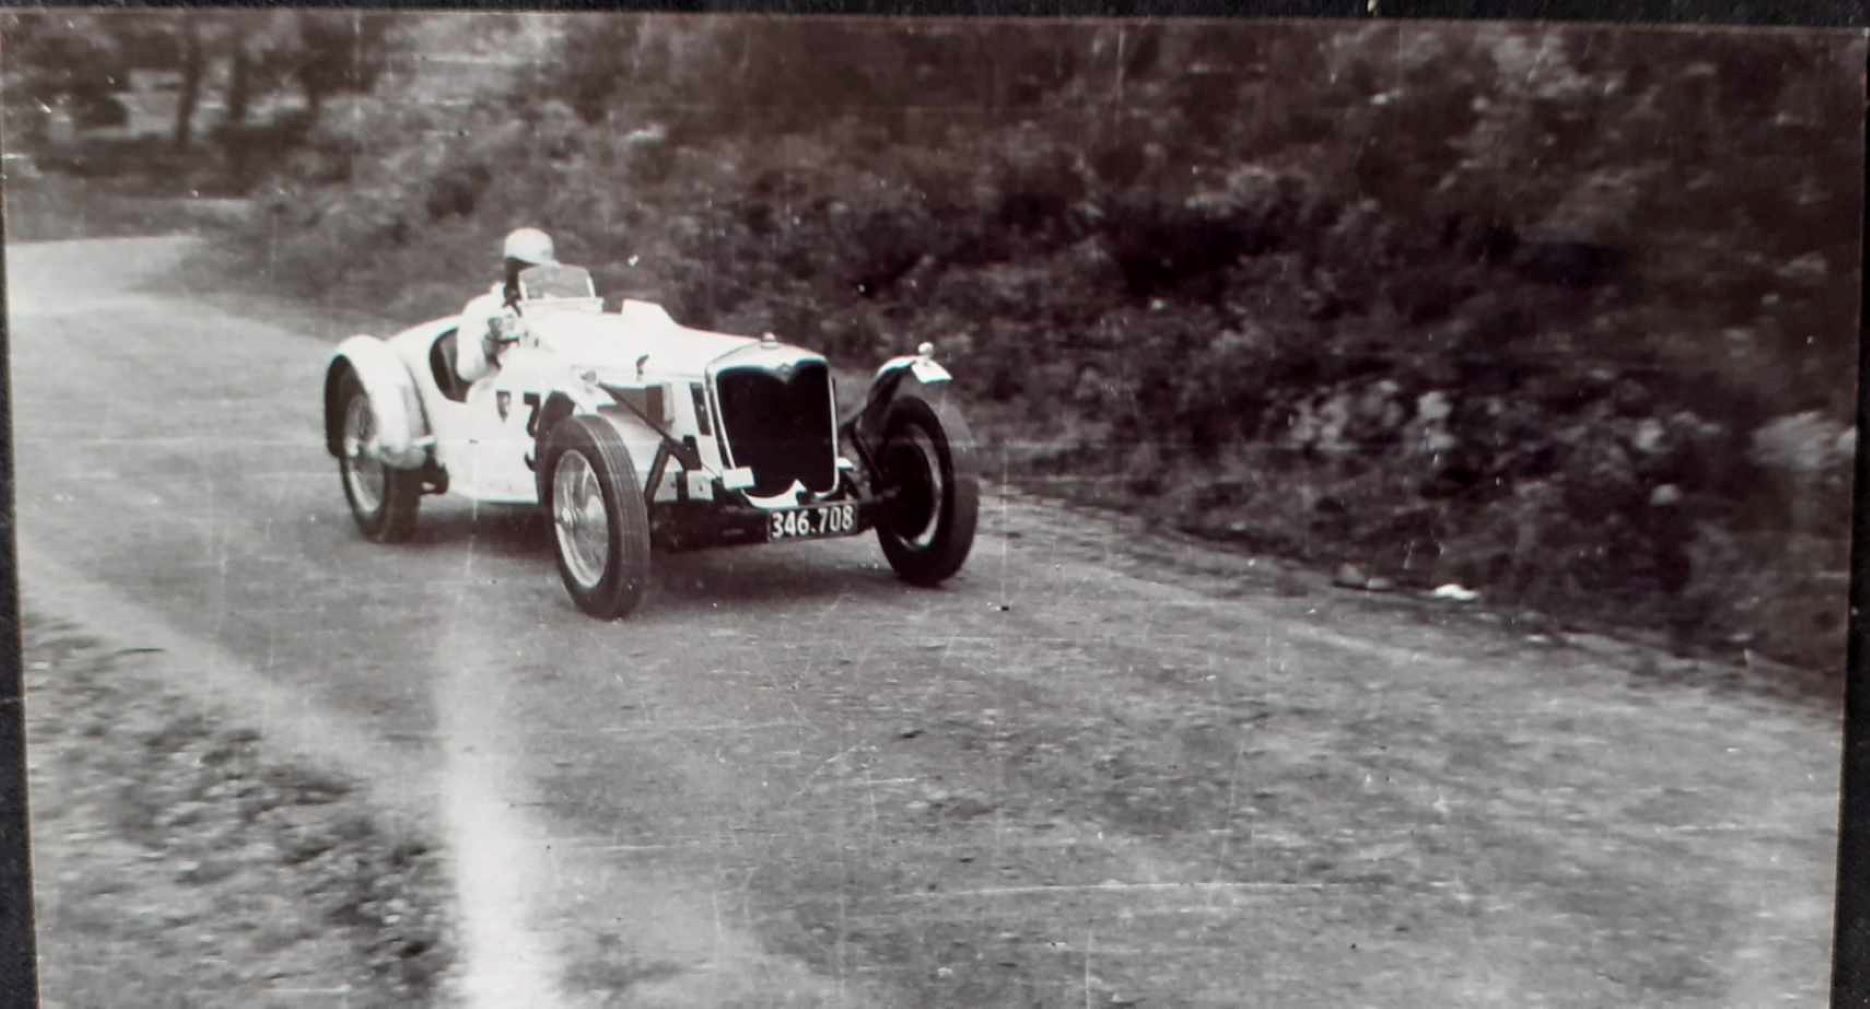 Name:  NSCC 1950 #0122 Riley Race #3 Q at Hill Climb - 346.708 1951 -56 plate 1950's - image Graeme Wel.jpg
Views: 187
Size:  178.4 KB